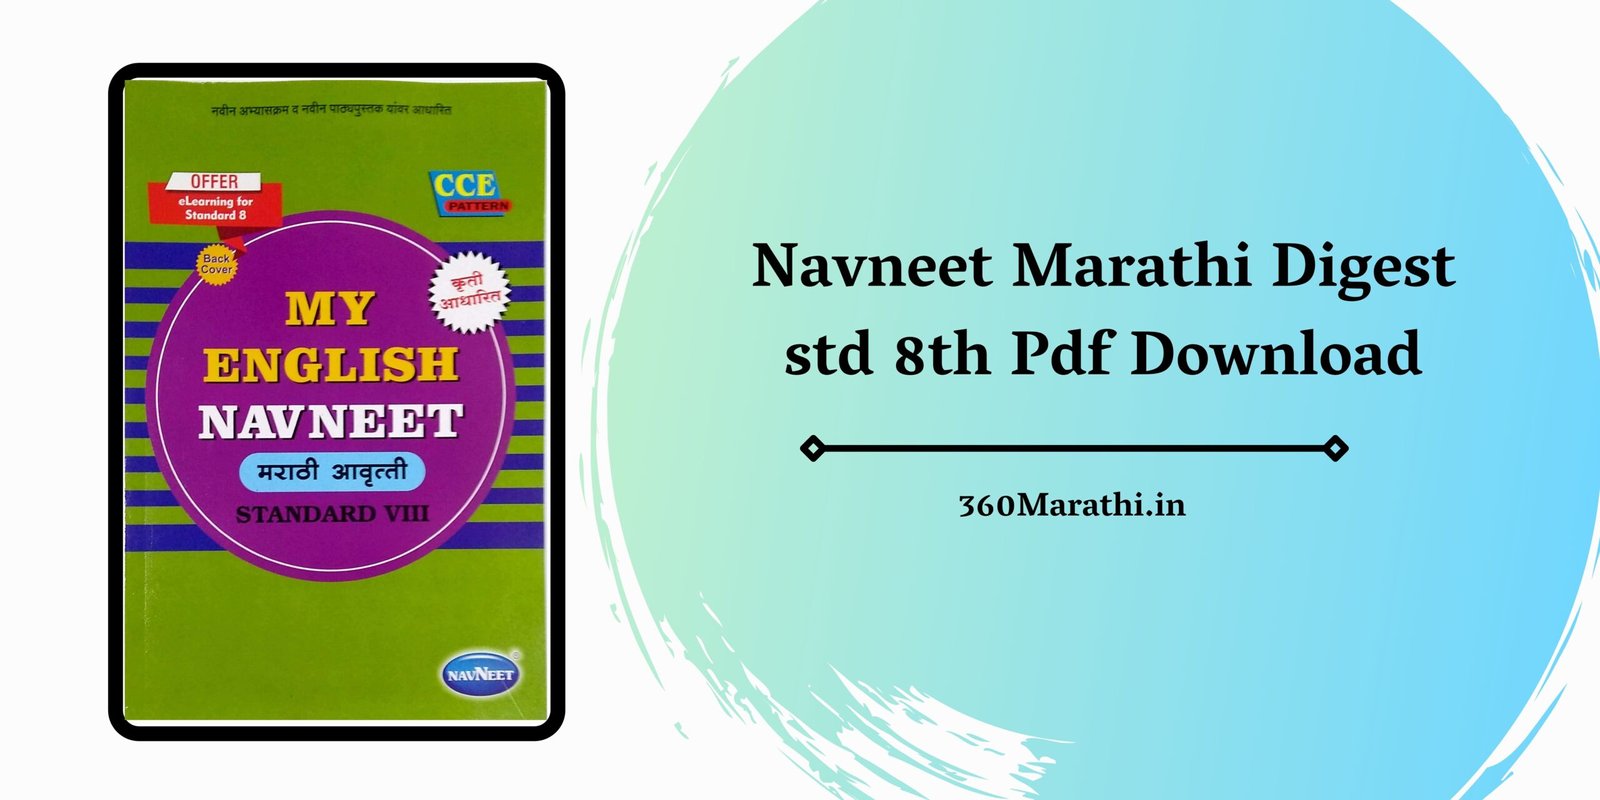 Navneet Marathi Digest std 8th Pdf Download